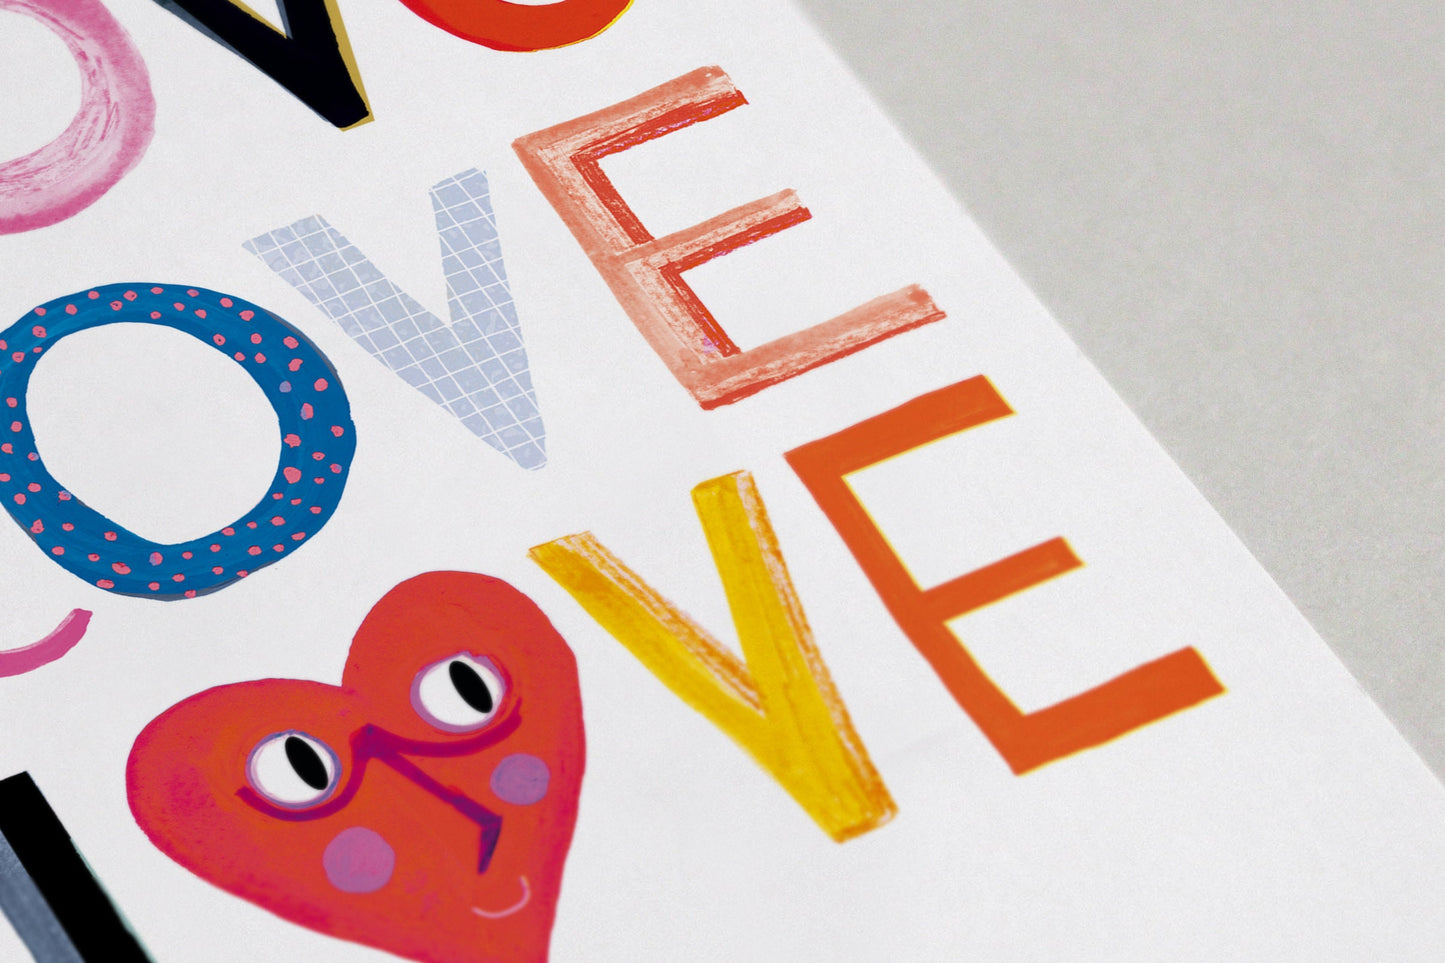 Postkarte LOVE LOVE LOVE